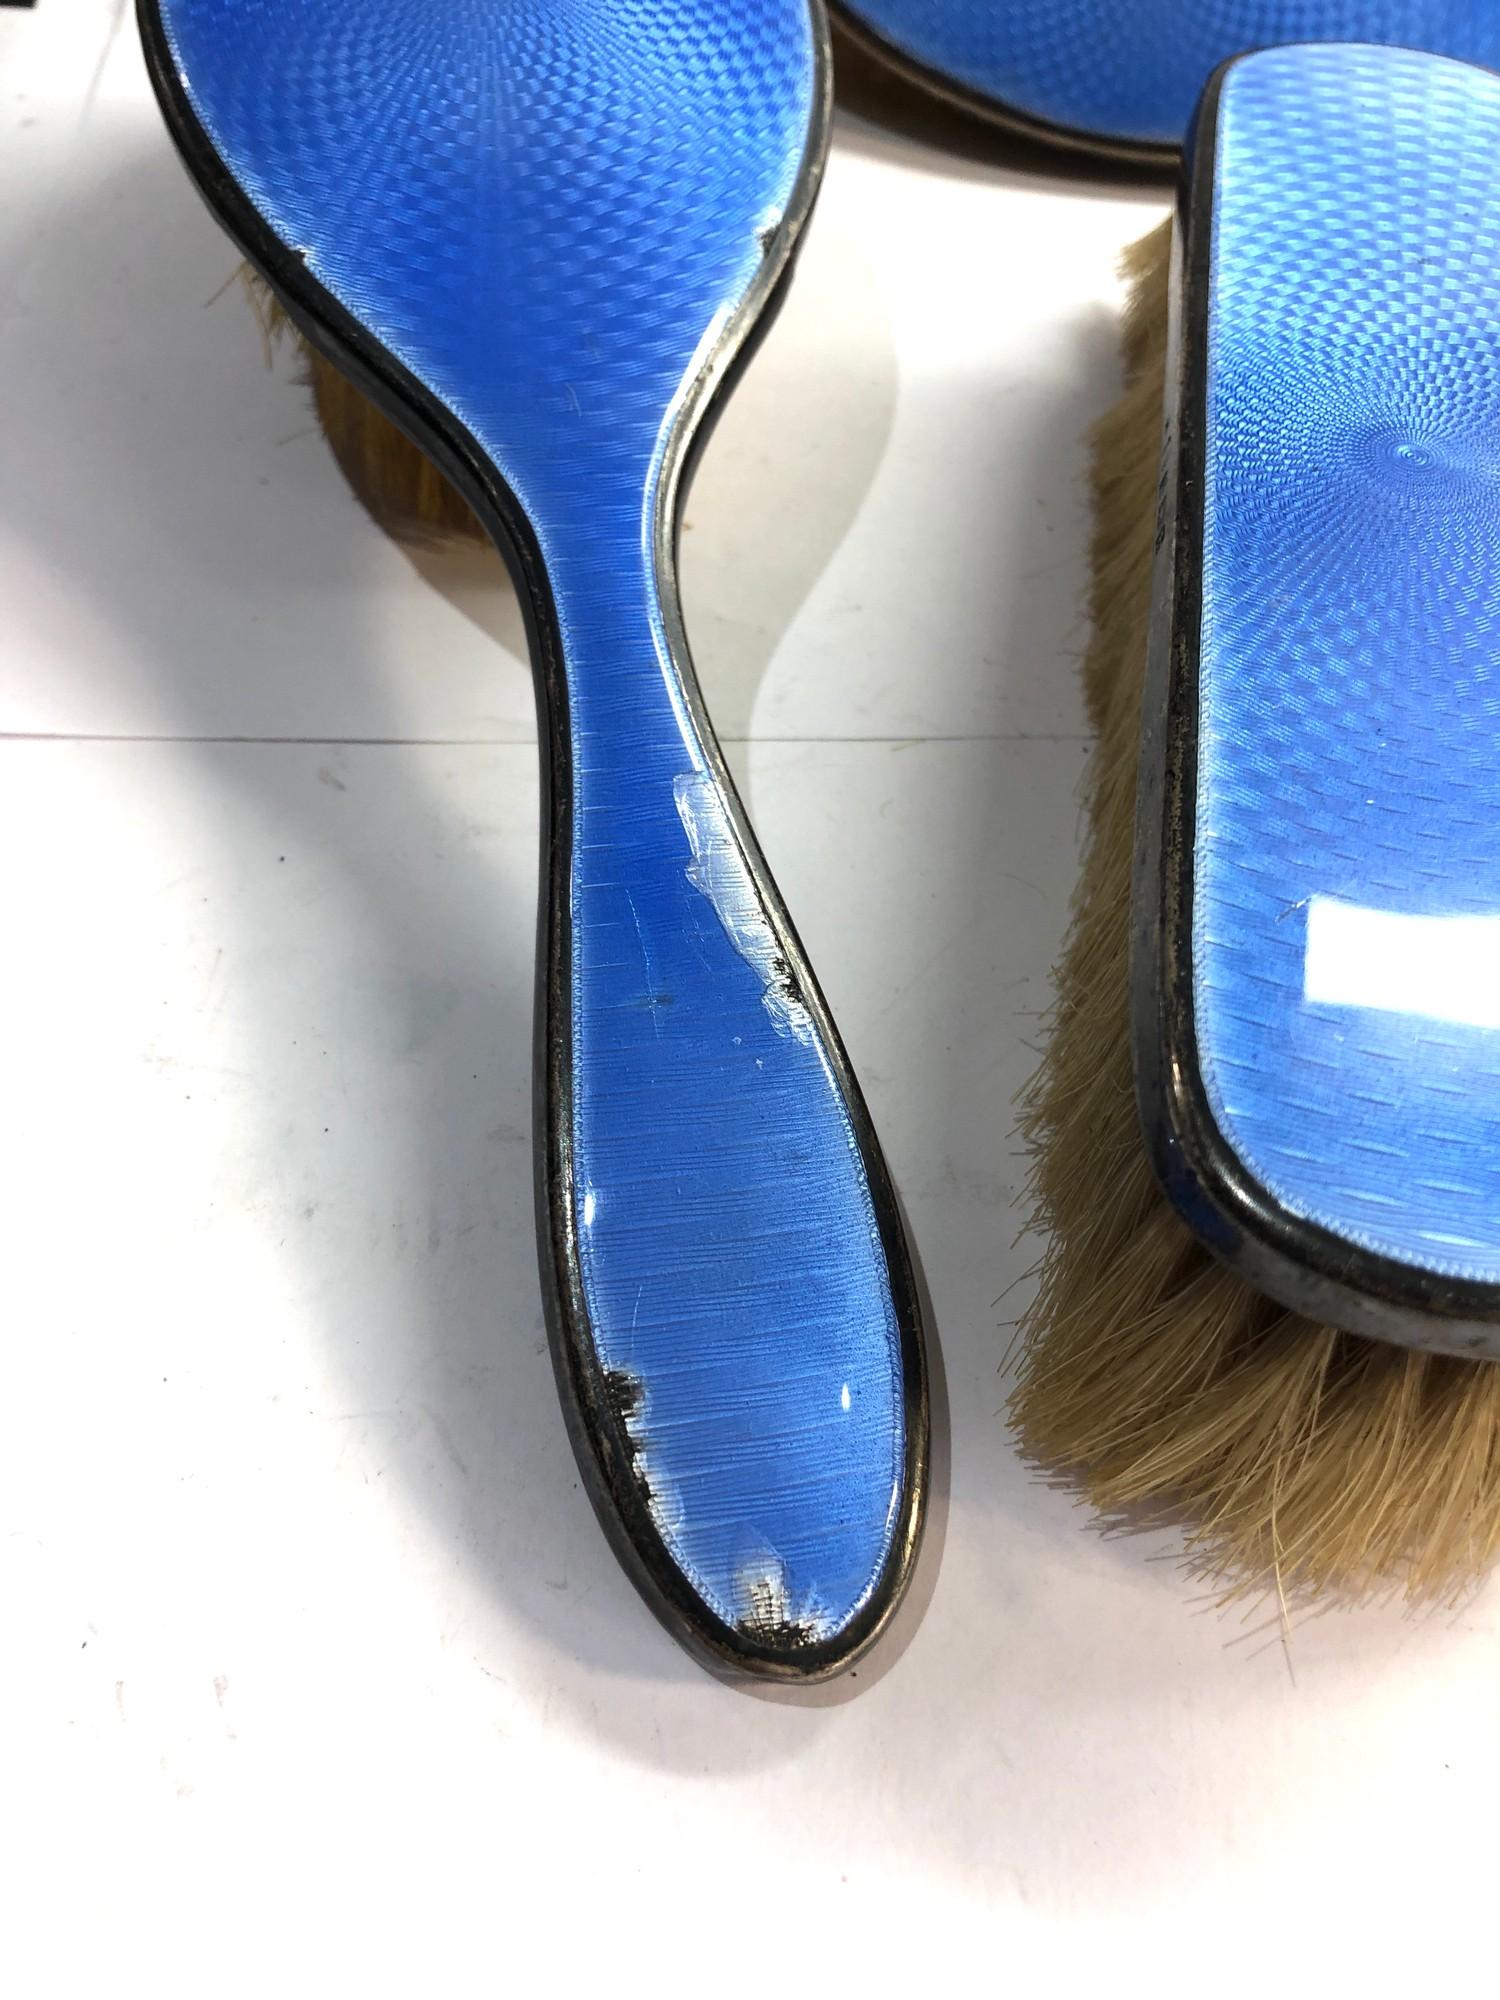 Antique silver and blue enamel brush set - Image 2 of 2